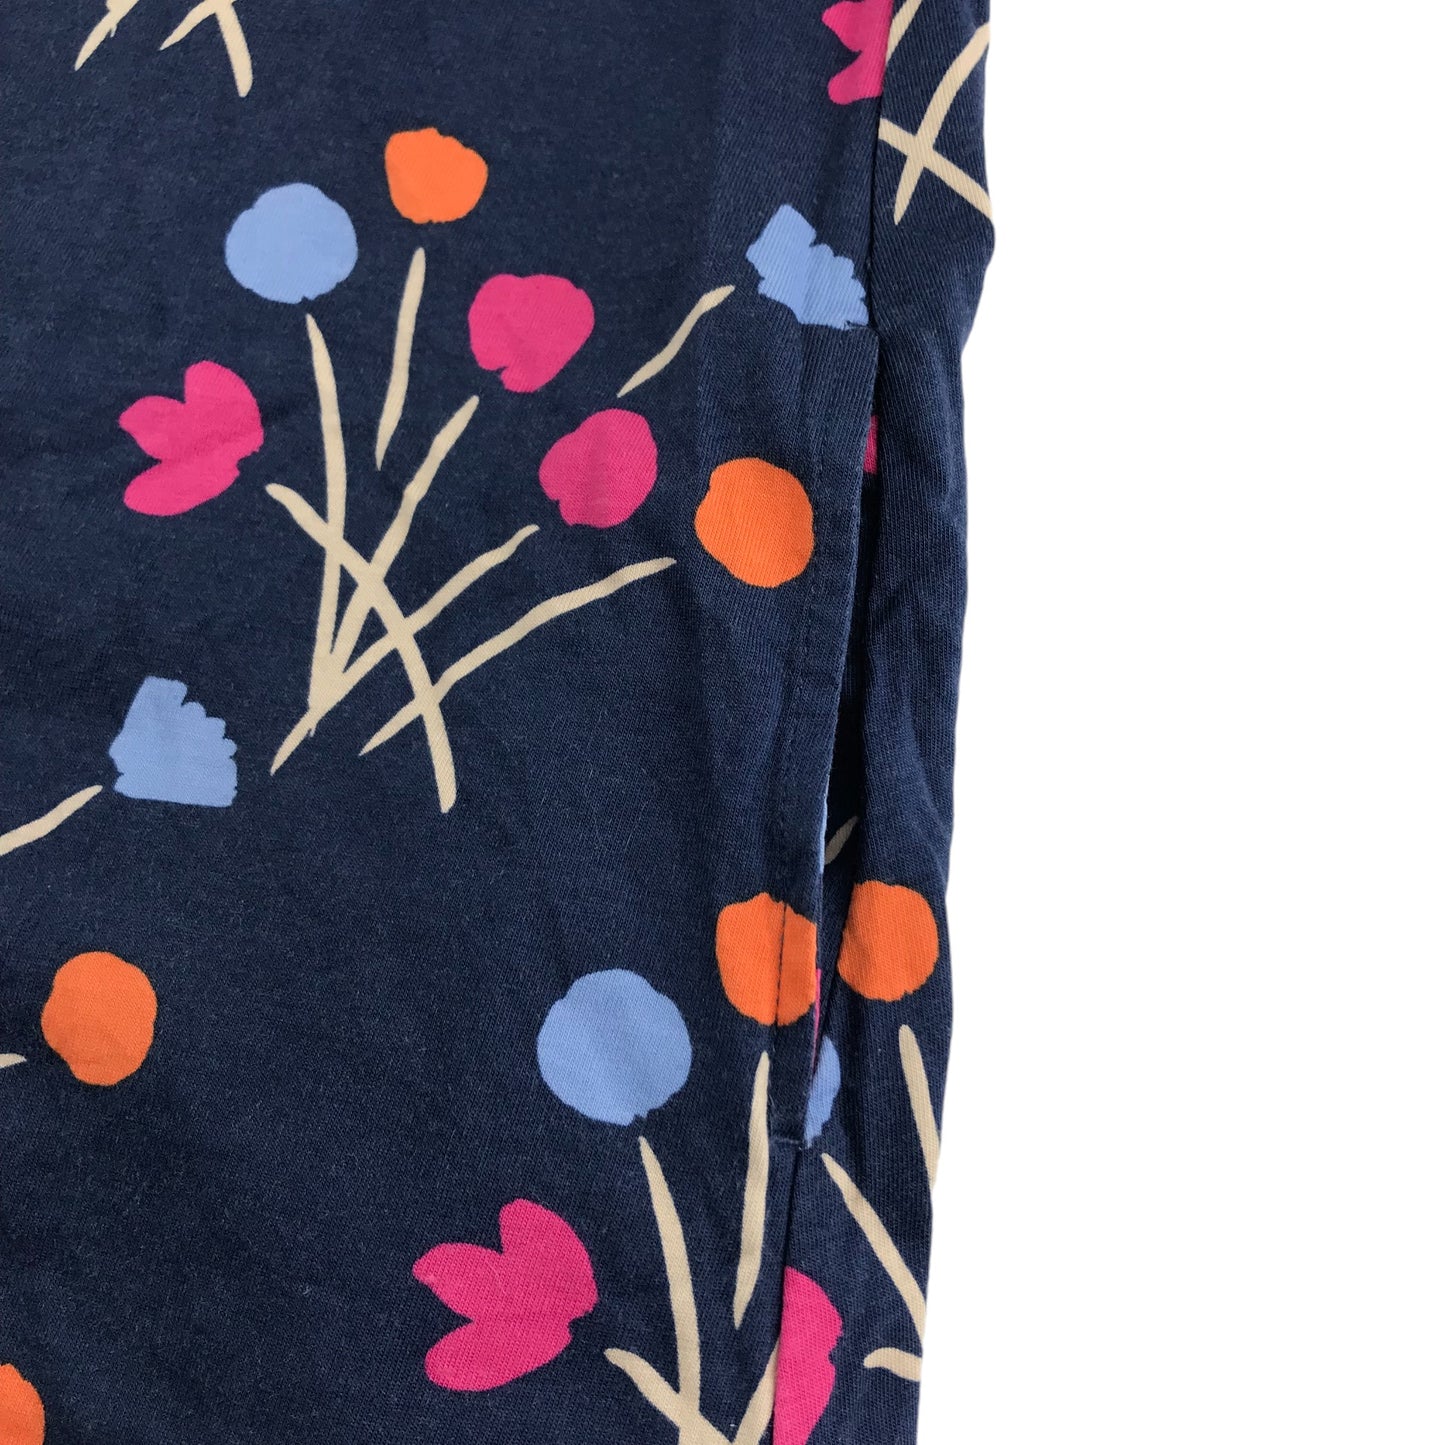 Marimekko x Uniqlo Dress Age 7 Navy Floral Design Cotton